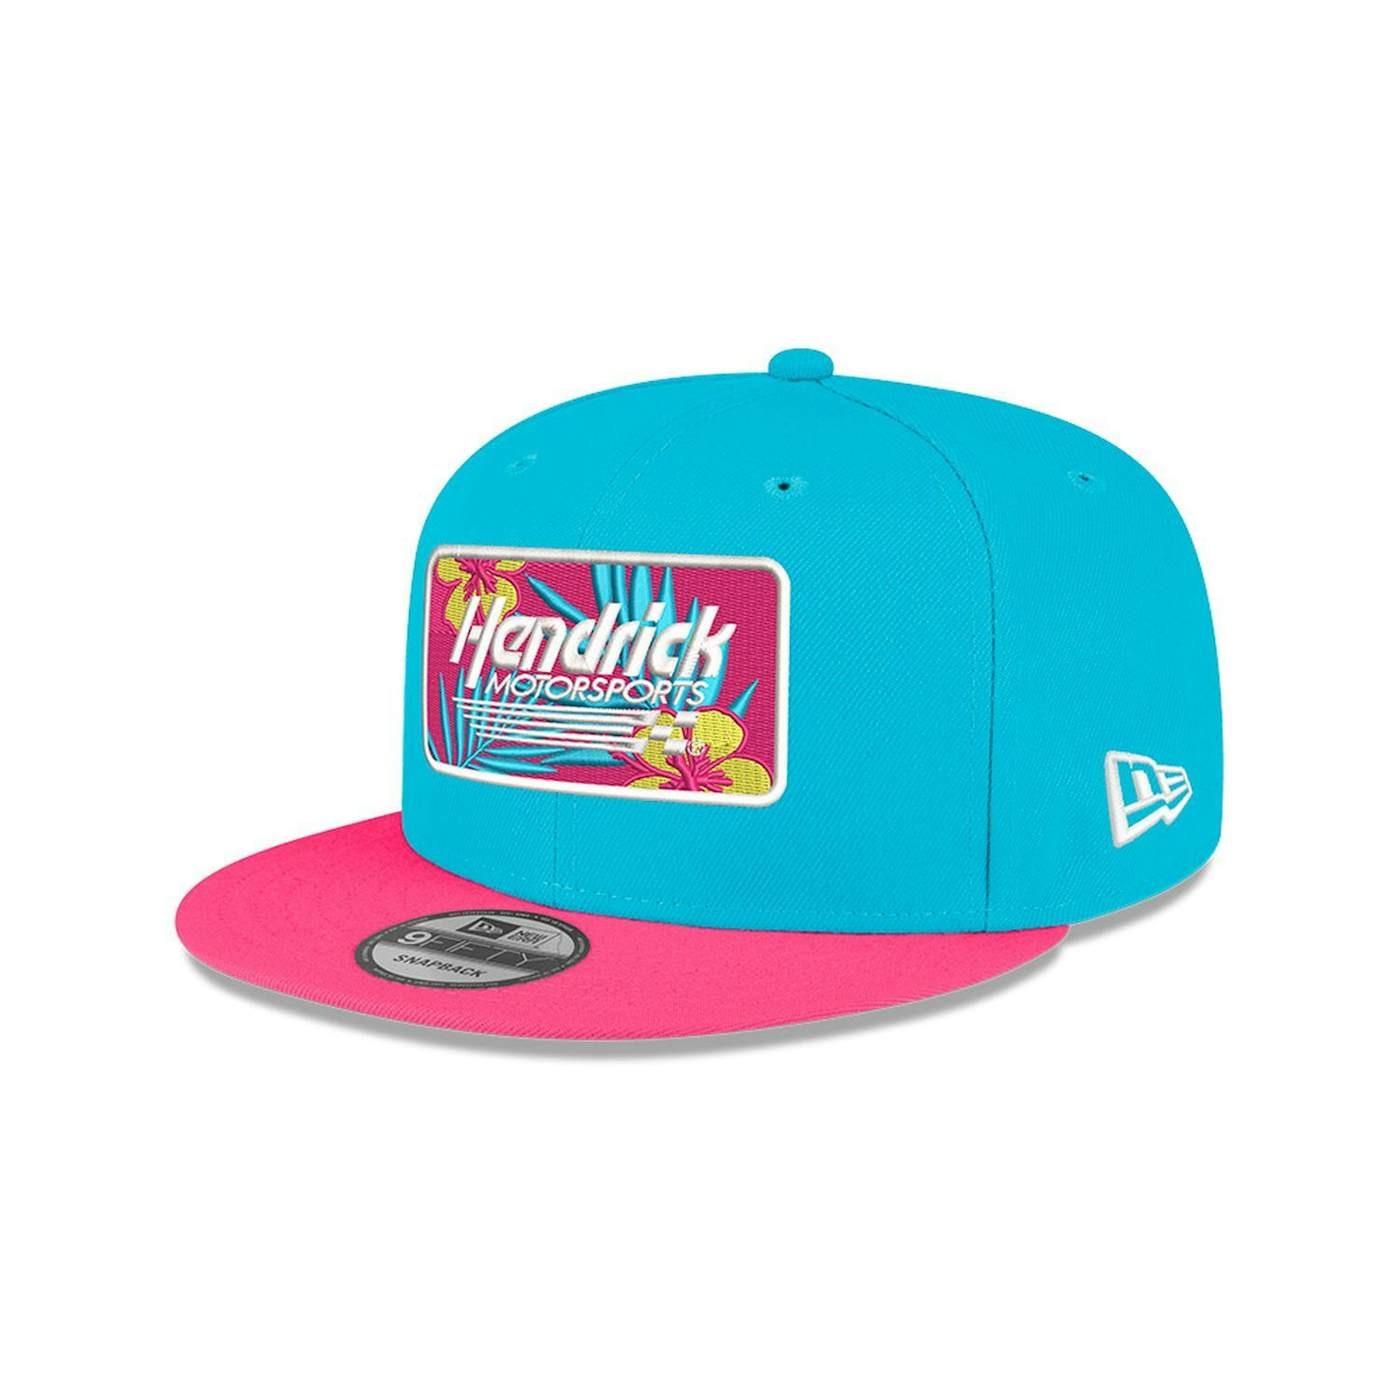 New Era Miami Heat Pink Vice Edition 9Fifty Snapback Cap